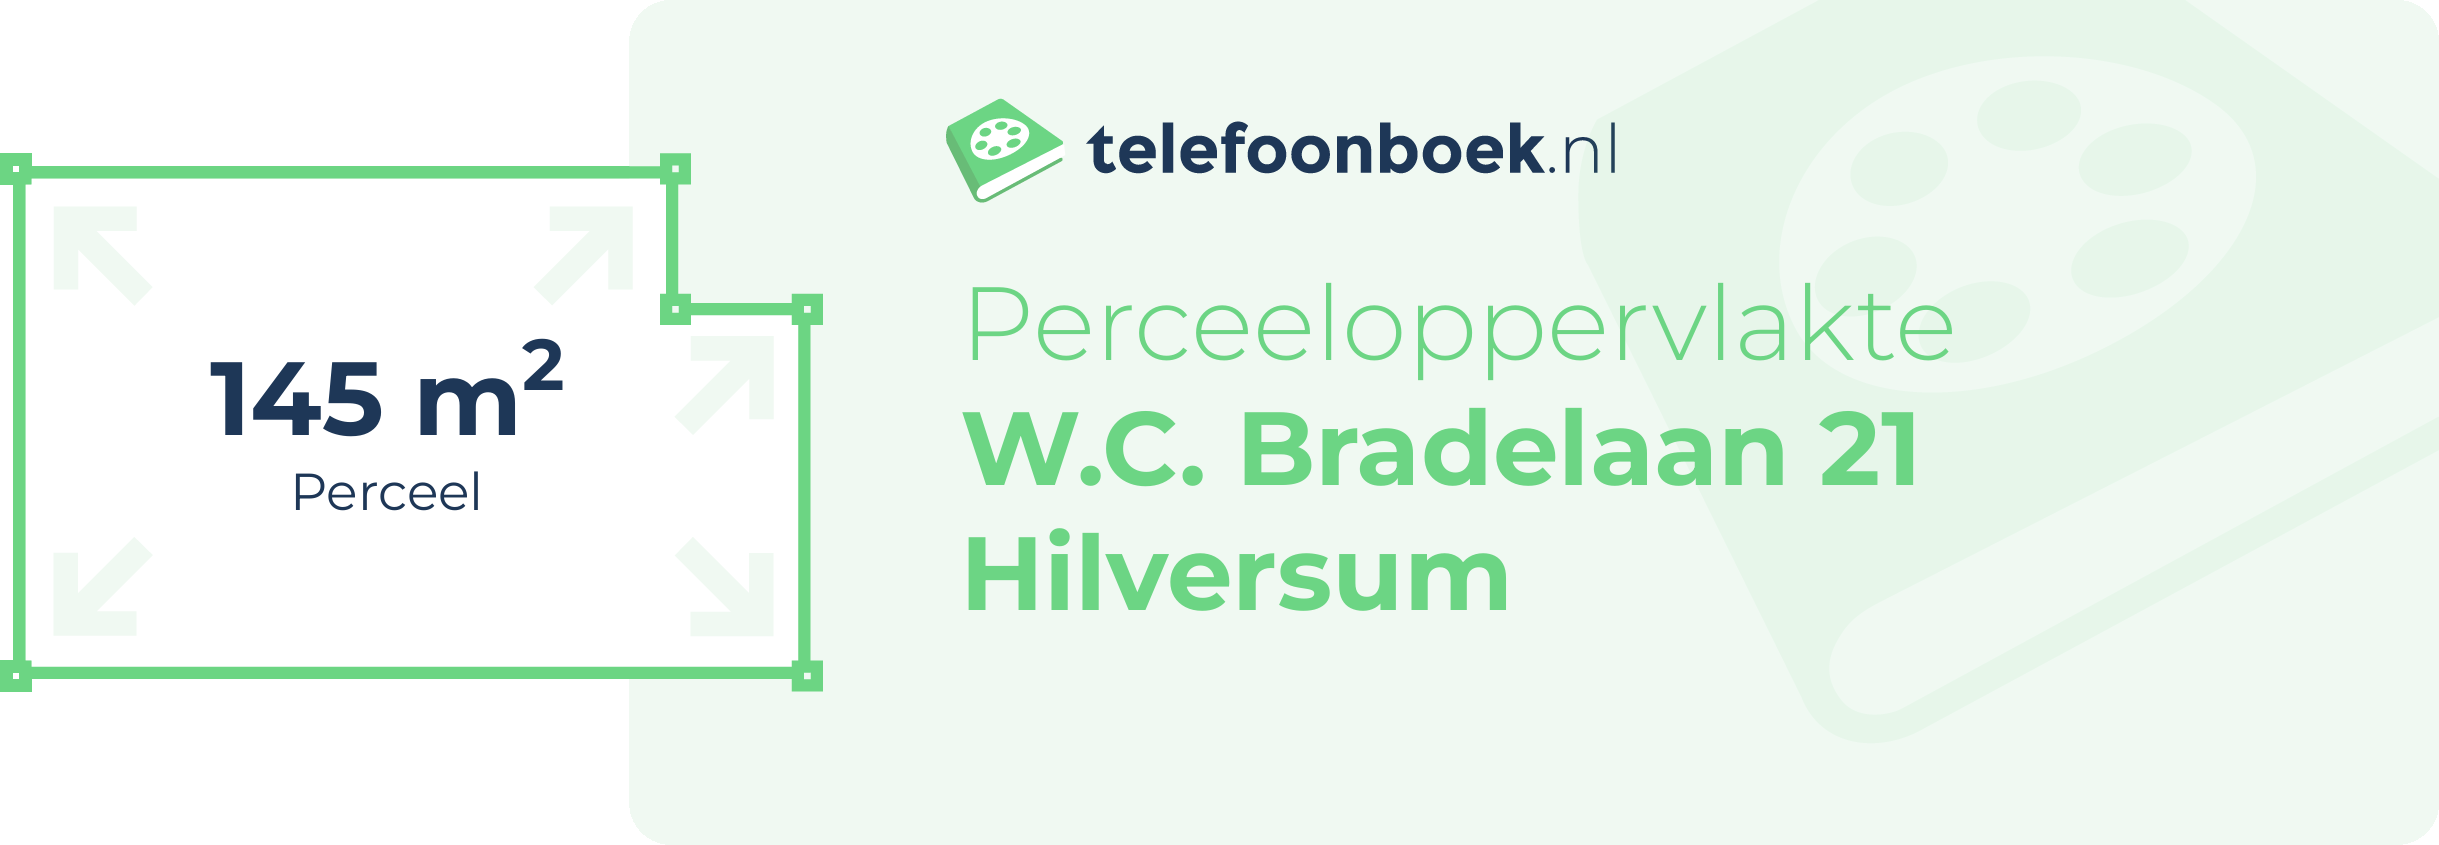 Perceeloppervlakte W.C. Bradelaan 21 Hilversum